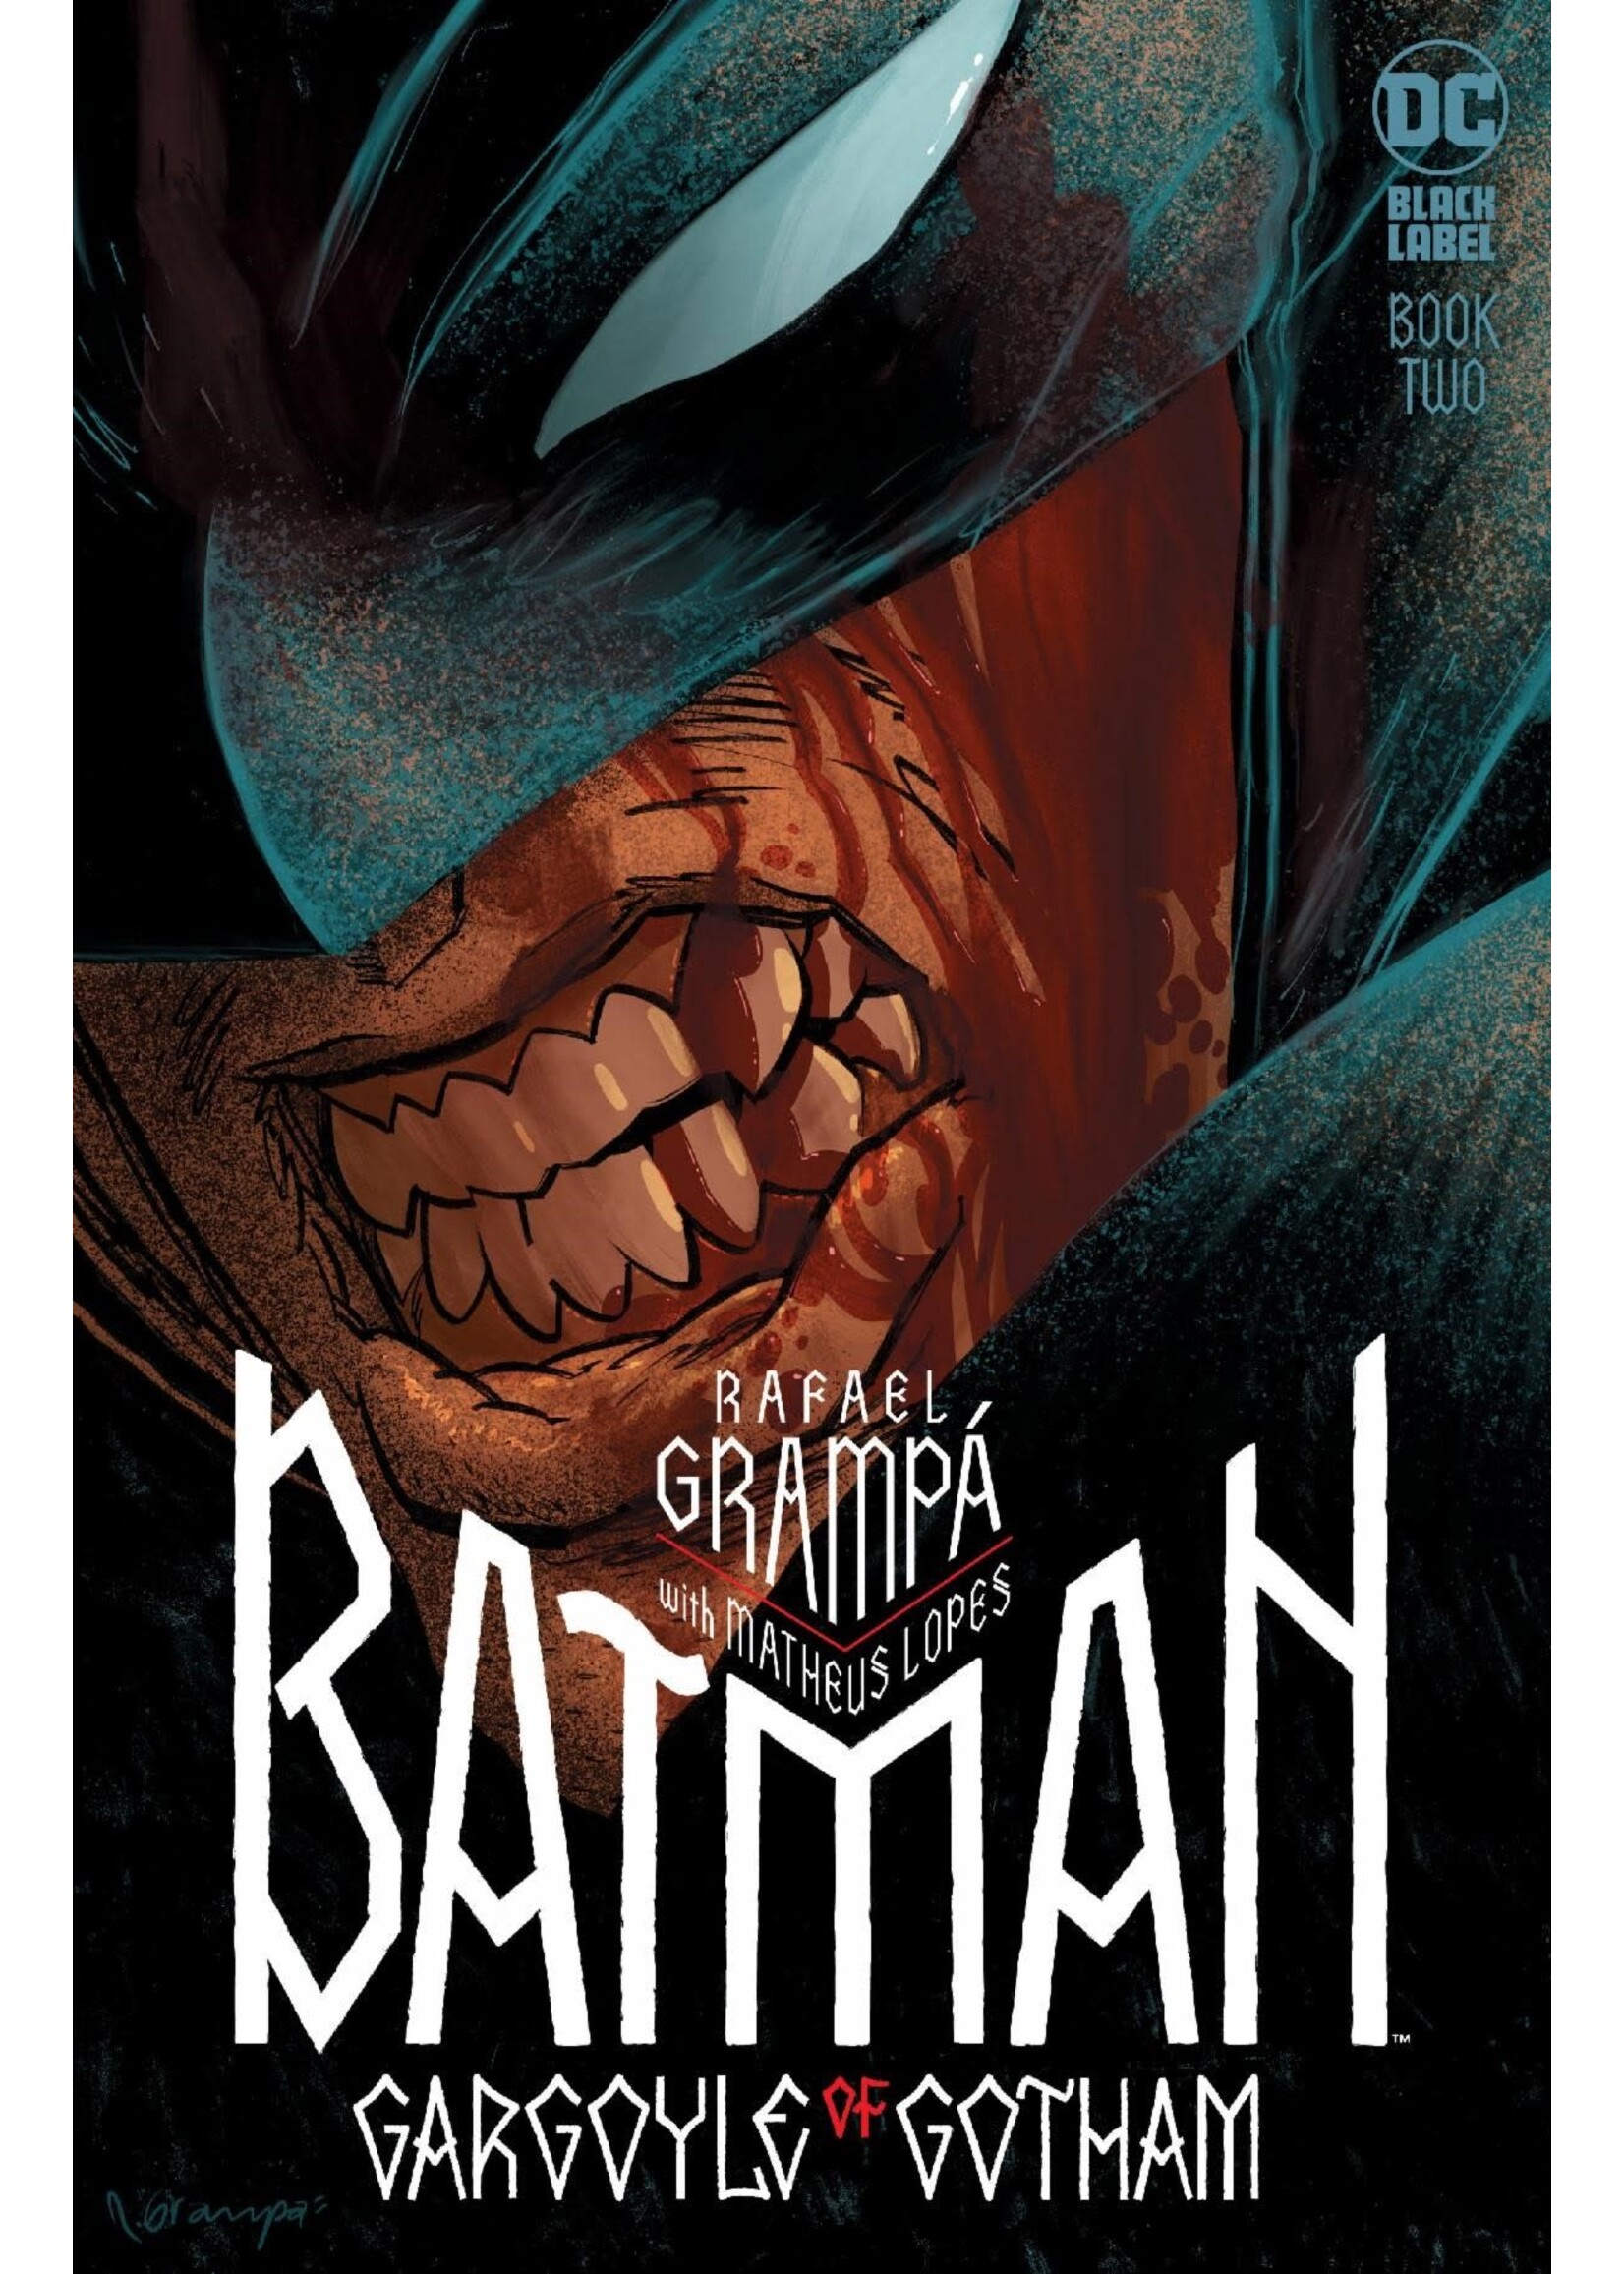 DC COMICS BATMAN GARGOYLE OF GOTHAM #2